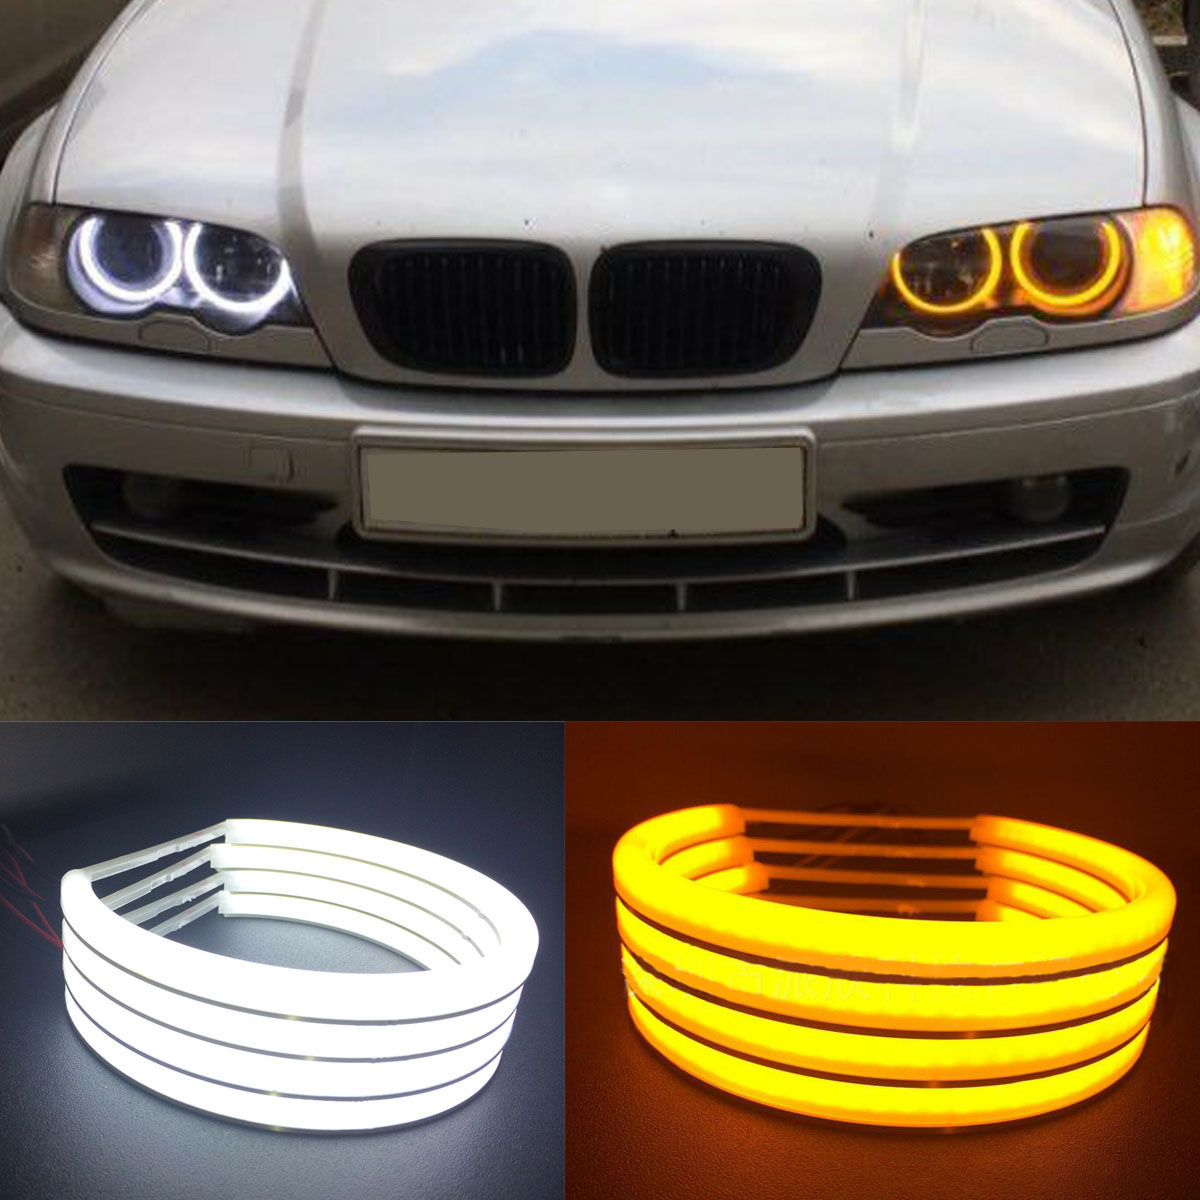 Fascinate Receiver cheap Kit inele Angel Eyes compatibil BMW seria 3, E46 E36, E39, E38 far cu lupa,  lumina alba si semnalizare galbena Pret 350,00 RON